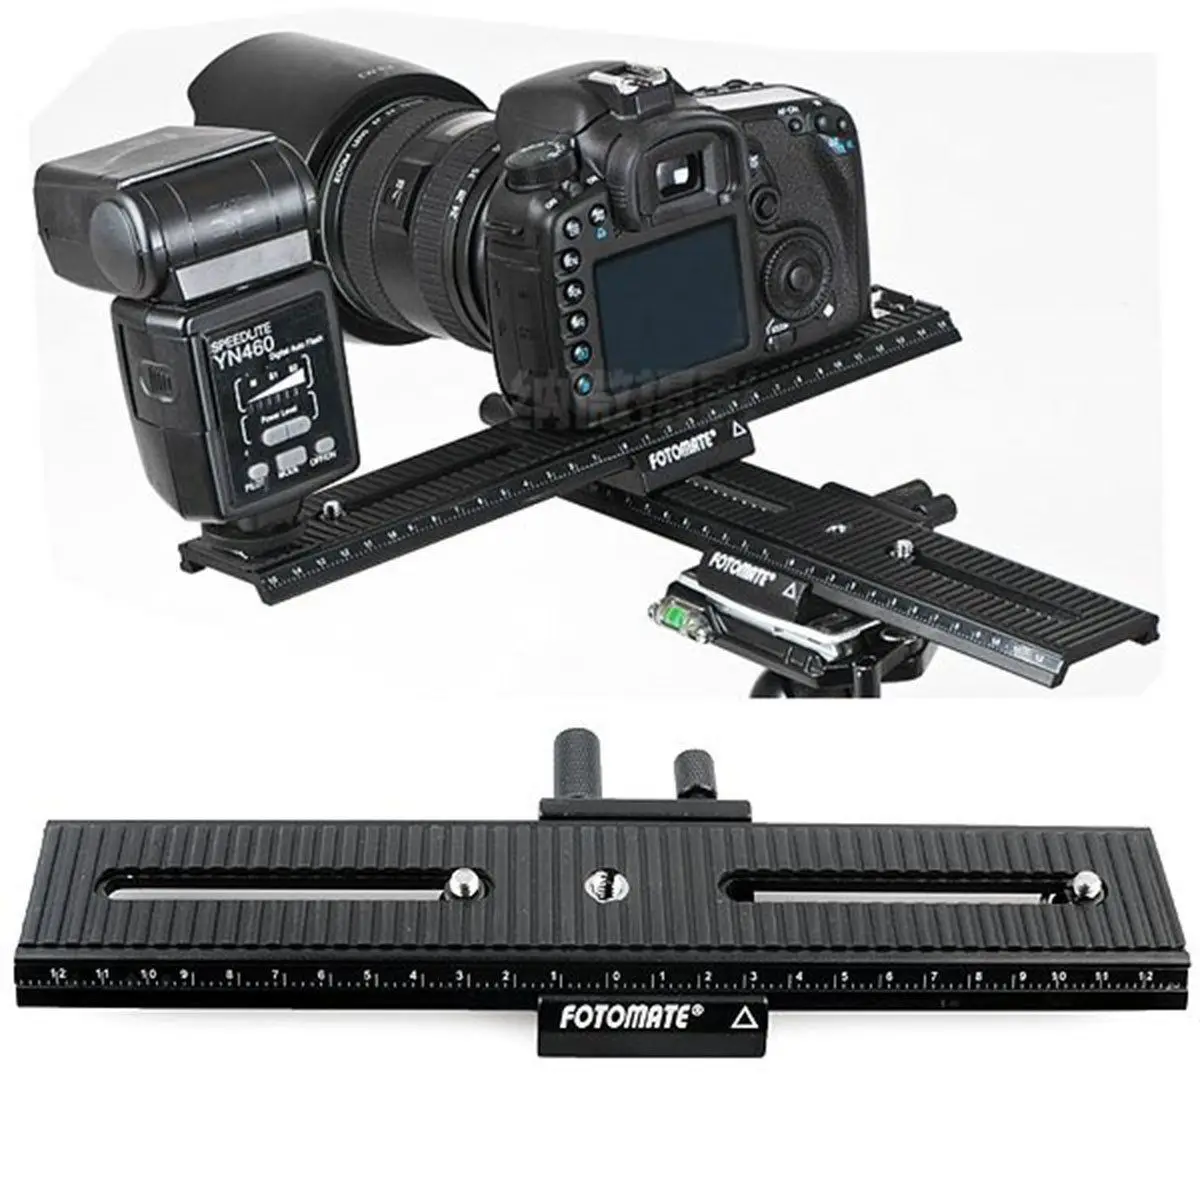 Fotomate compact Aluminum Alloy Tripod for Canon Nikon Digital Camera DSLR